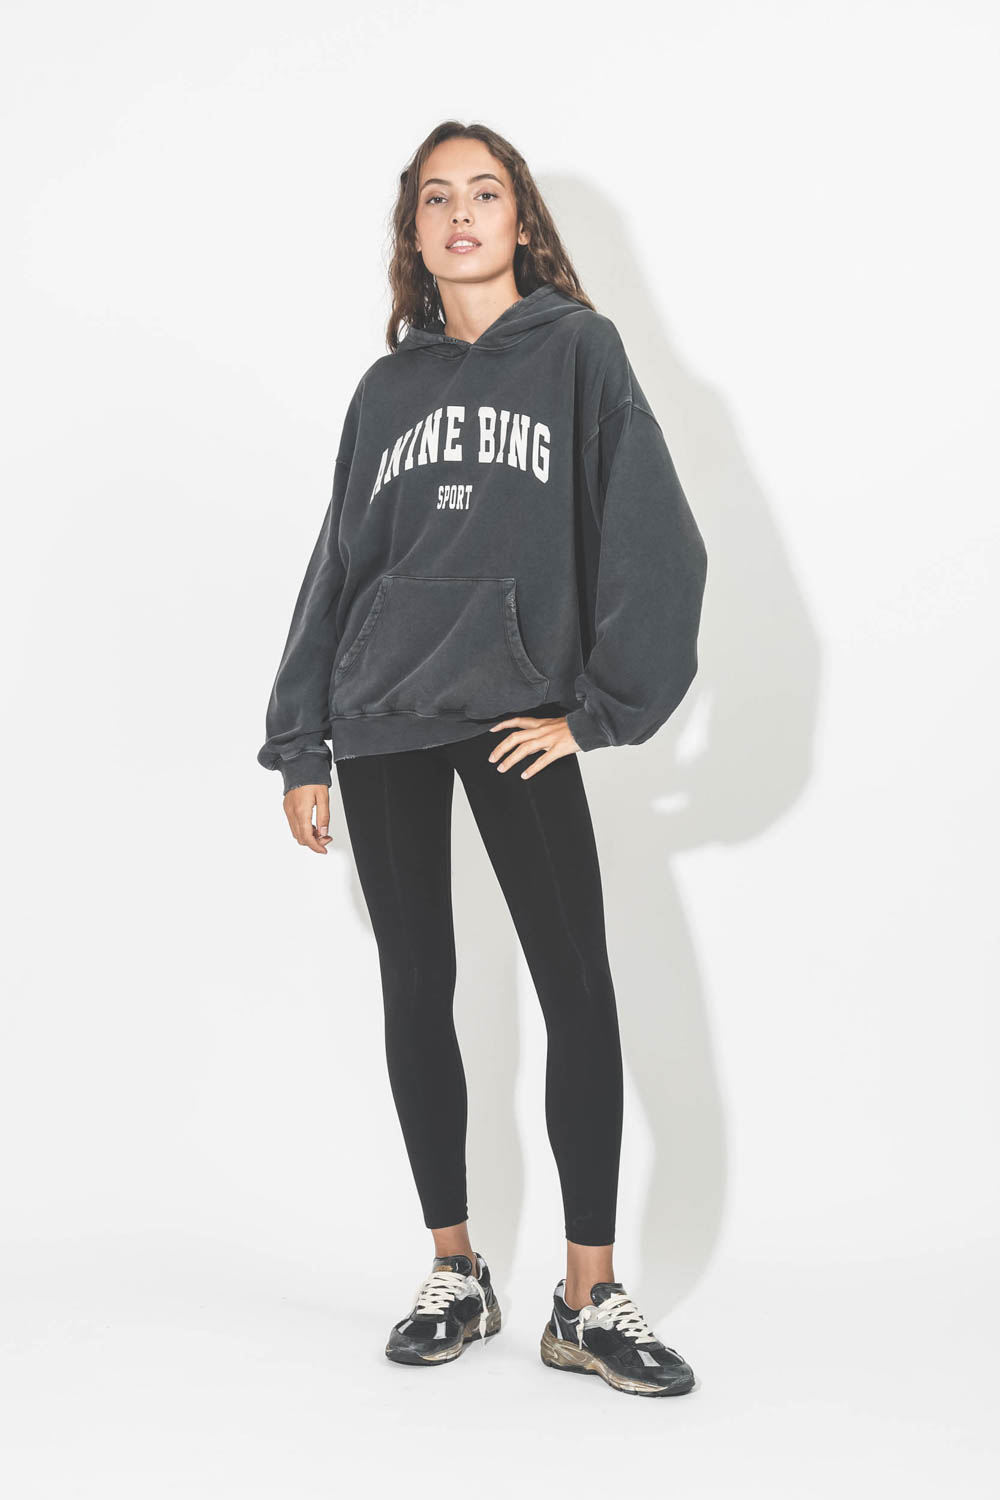 Anine Bing Harvey Sweatshirt – Washed Black